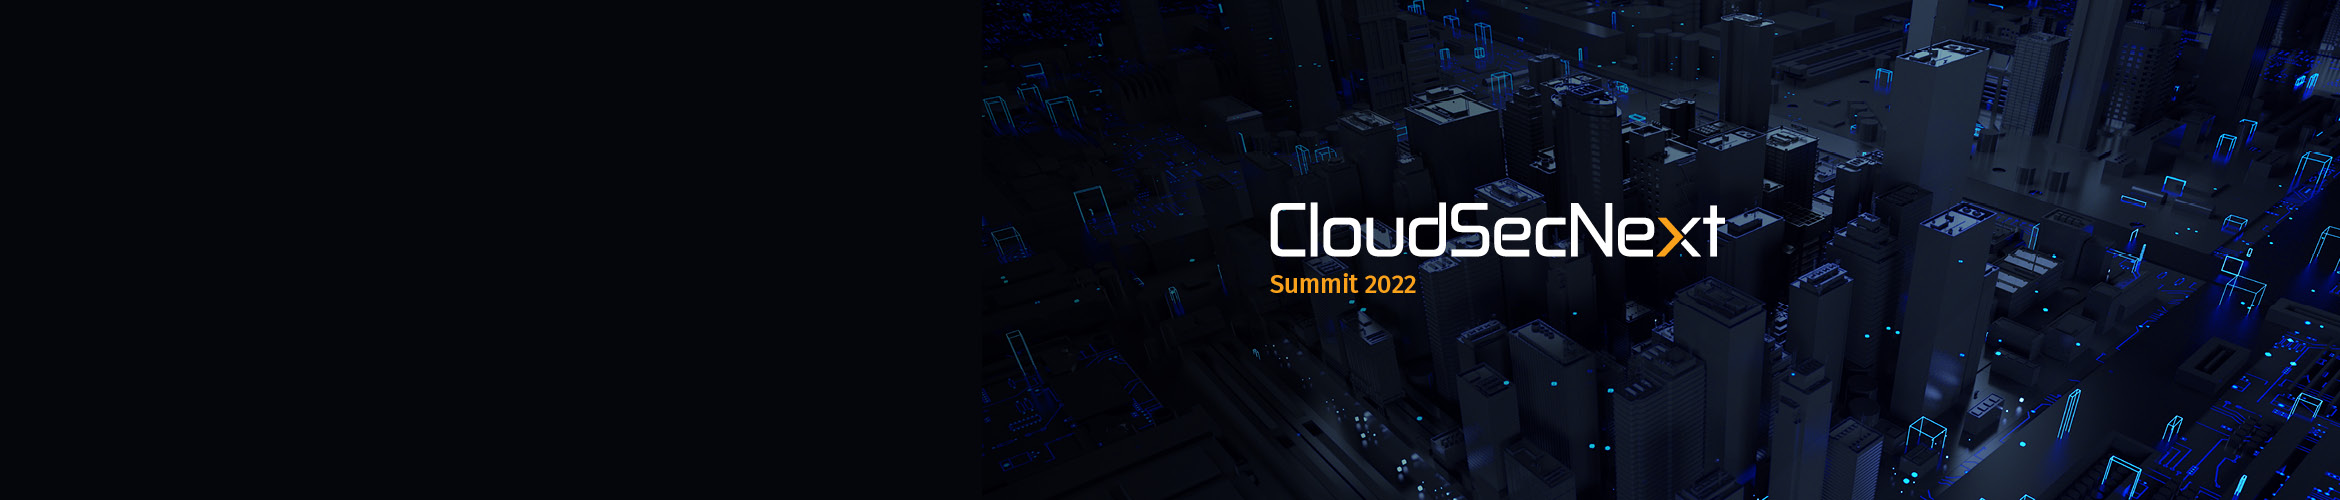 CloudSecNext-2022_2340x500.jpg